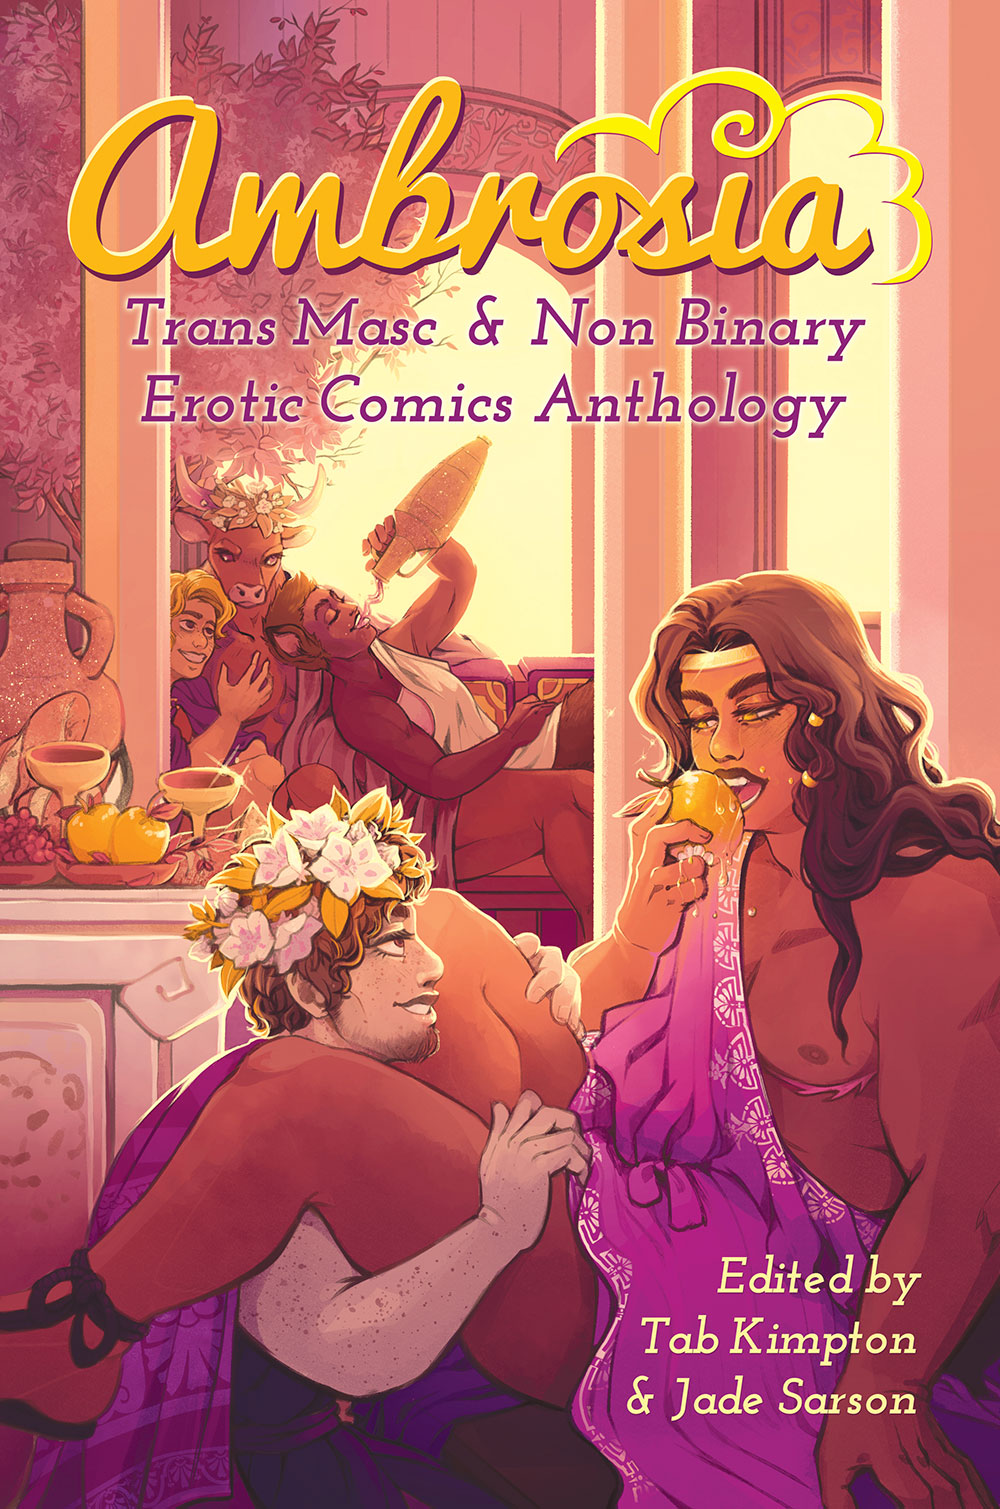 Ambrosia: Trans Masc & Non-binary Erotic Comics